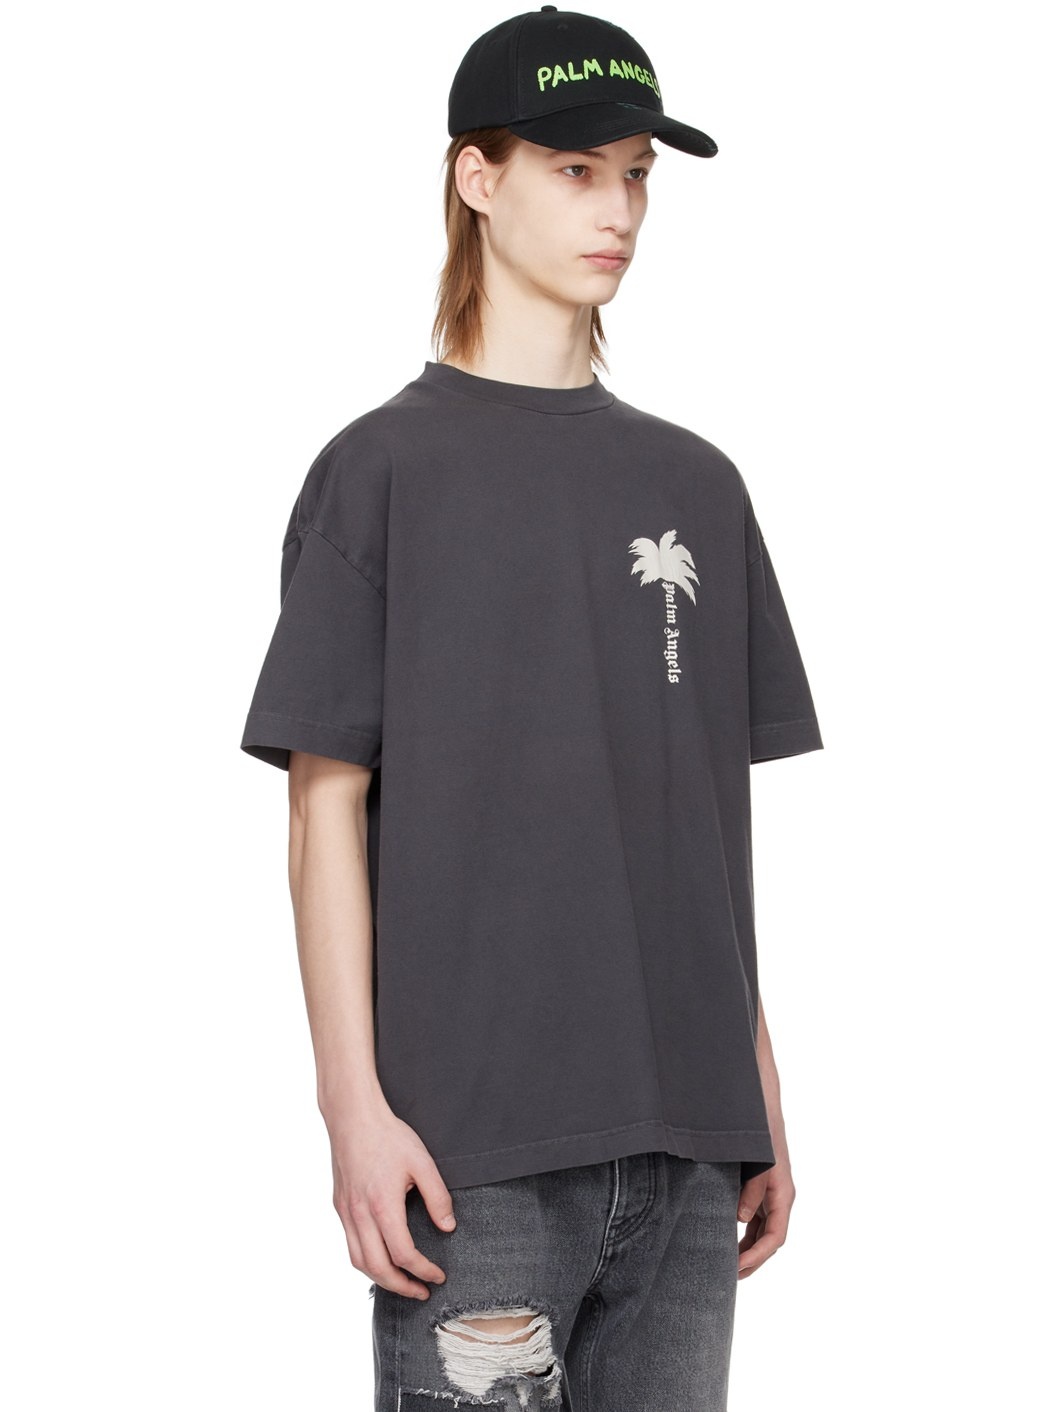 Gray 'The Palm' T-Shirt - 2